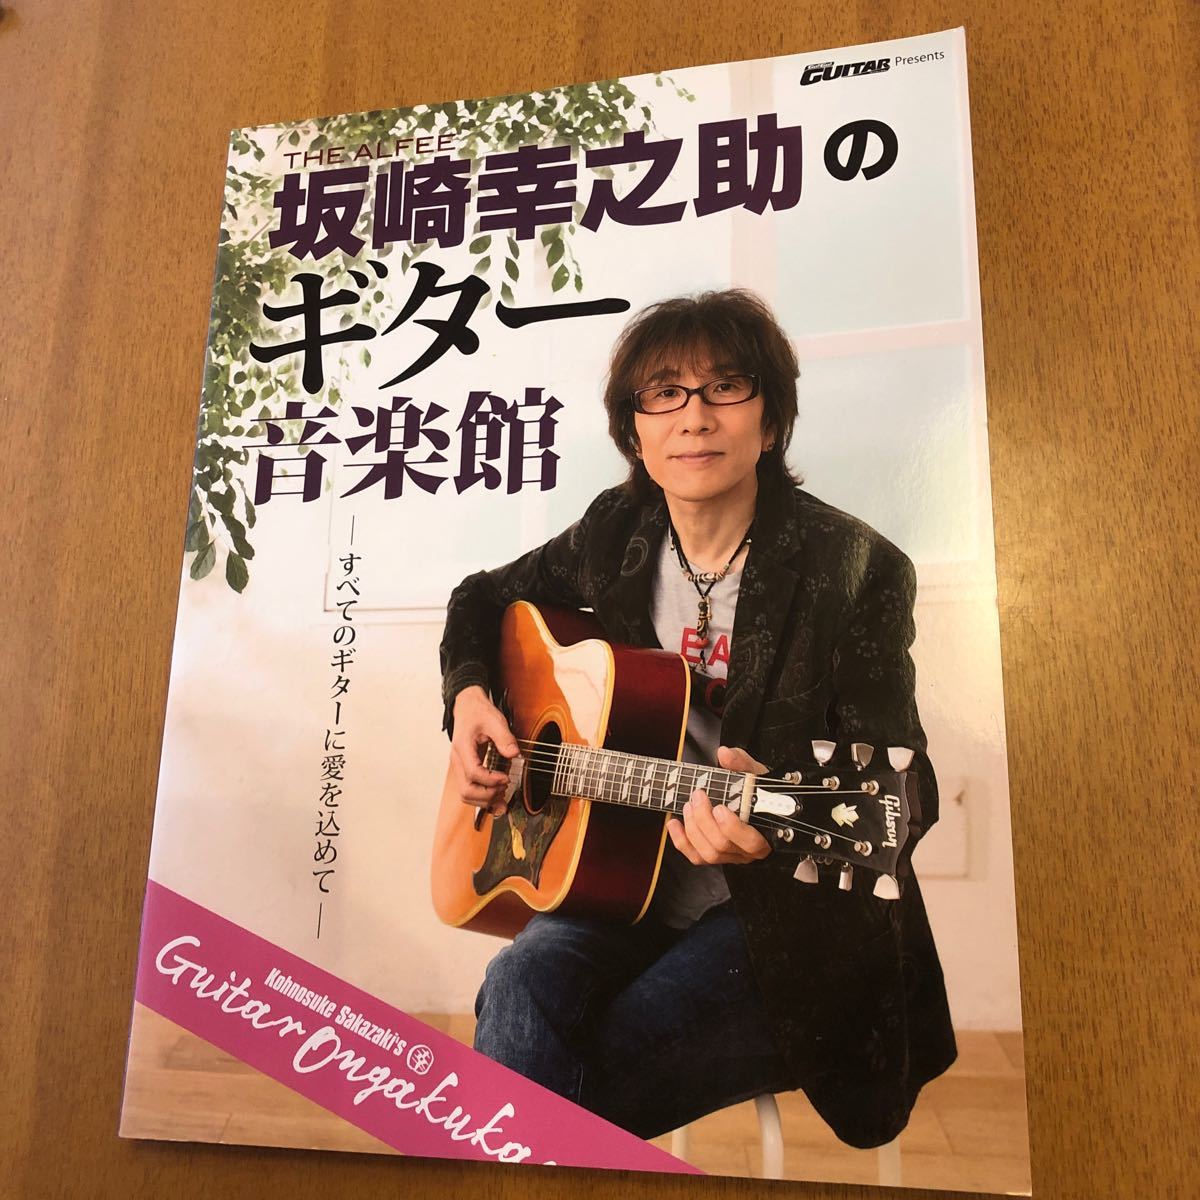 THE ALFEE 坂崎幸之助のギター音楽館 すべてのギターに愛を込めて 坂崎幸之助 アルフィー